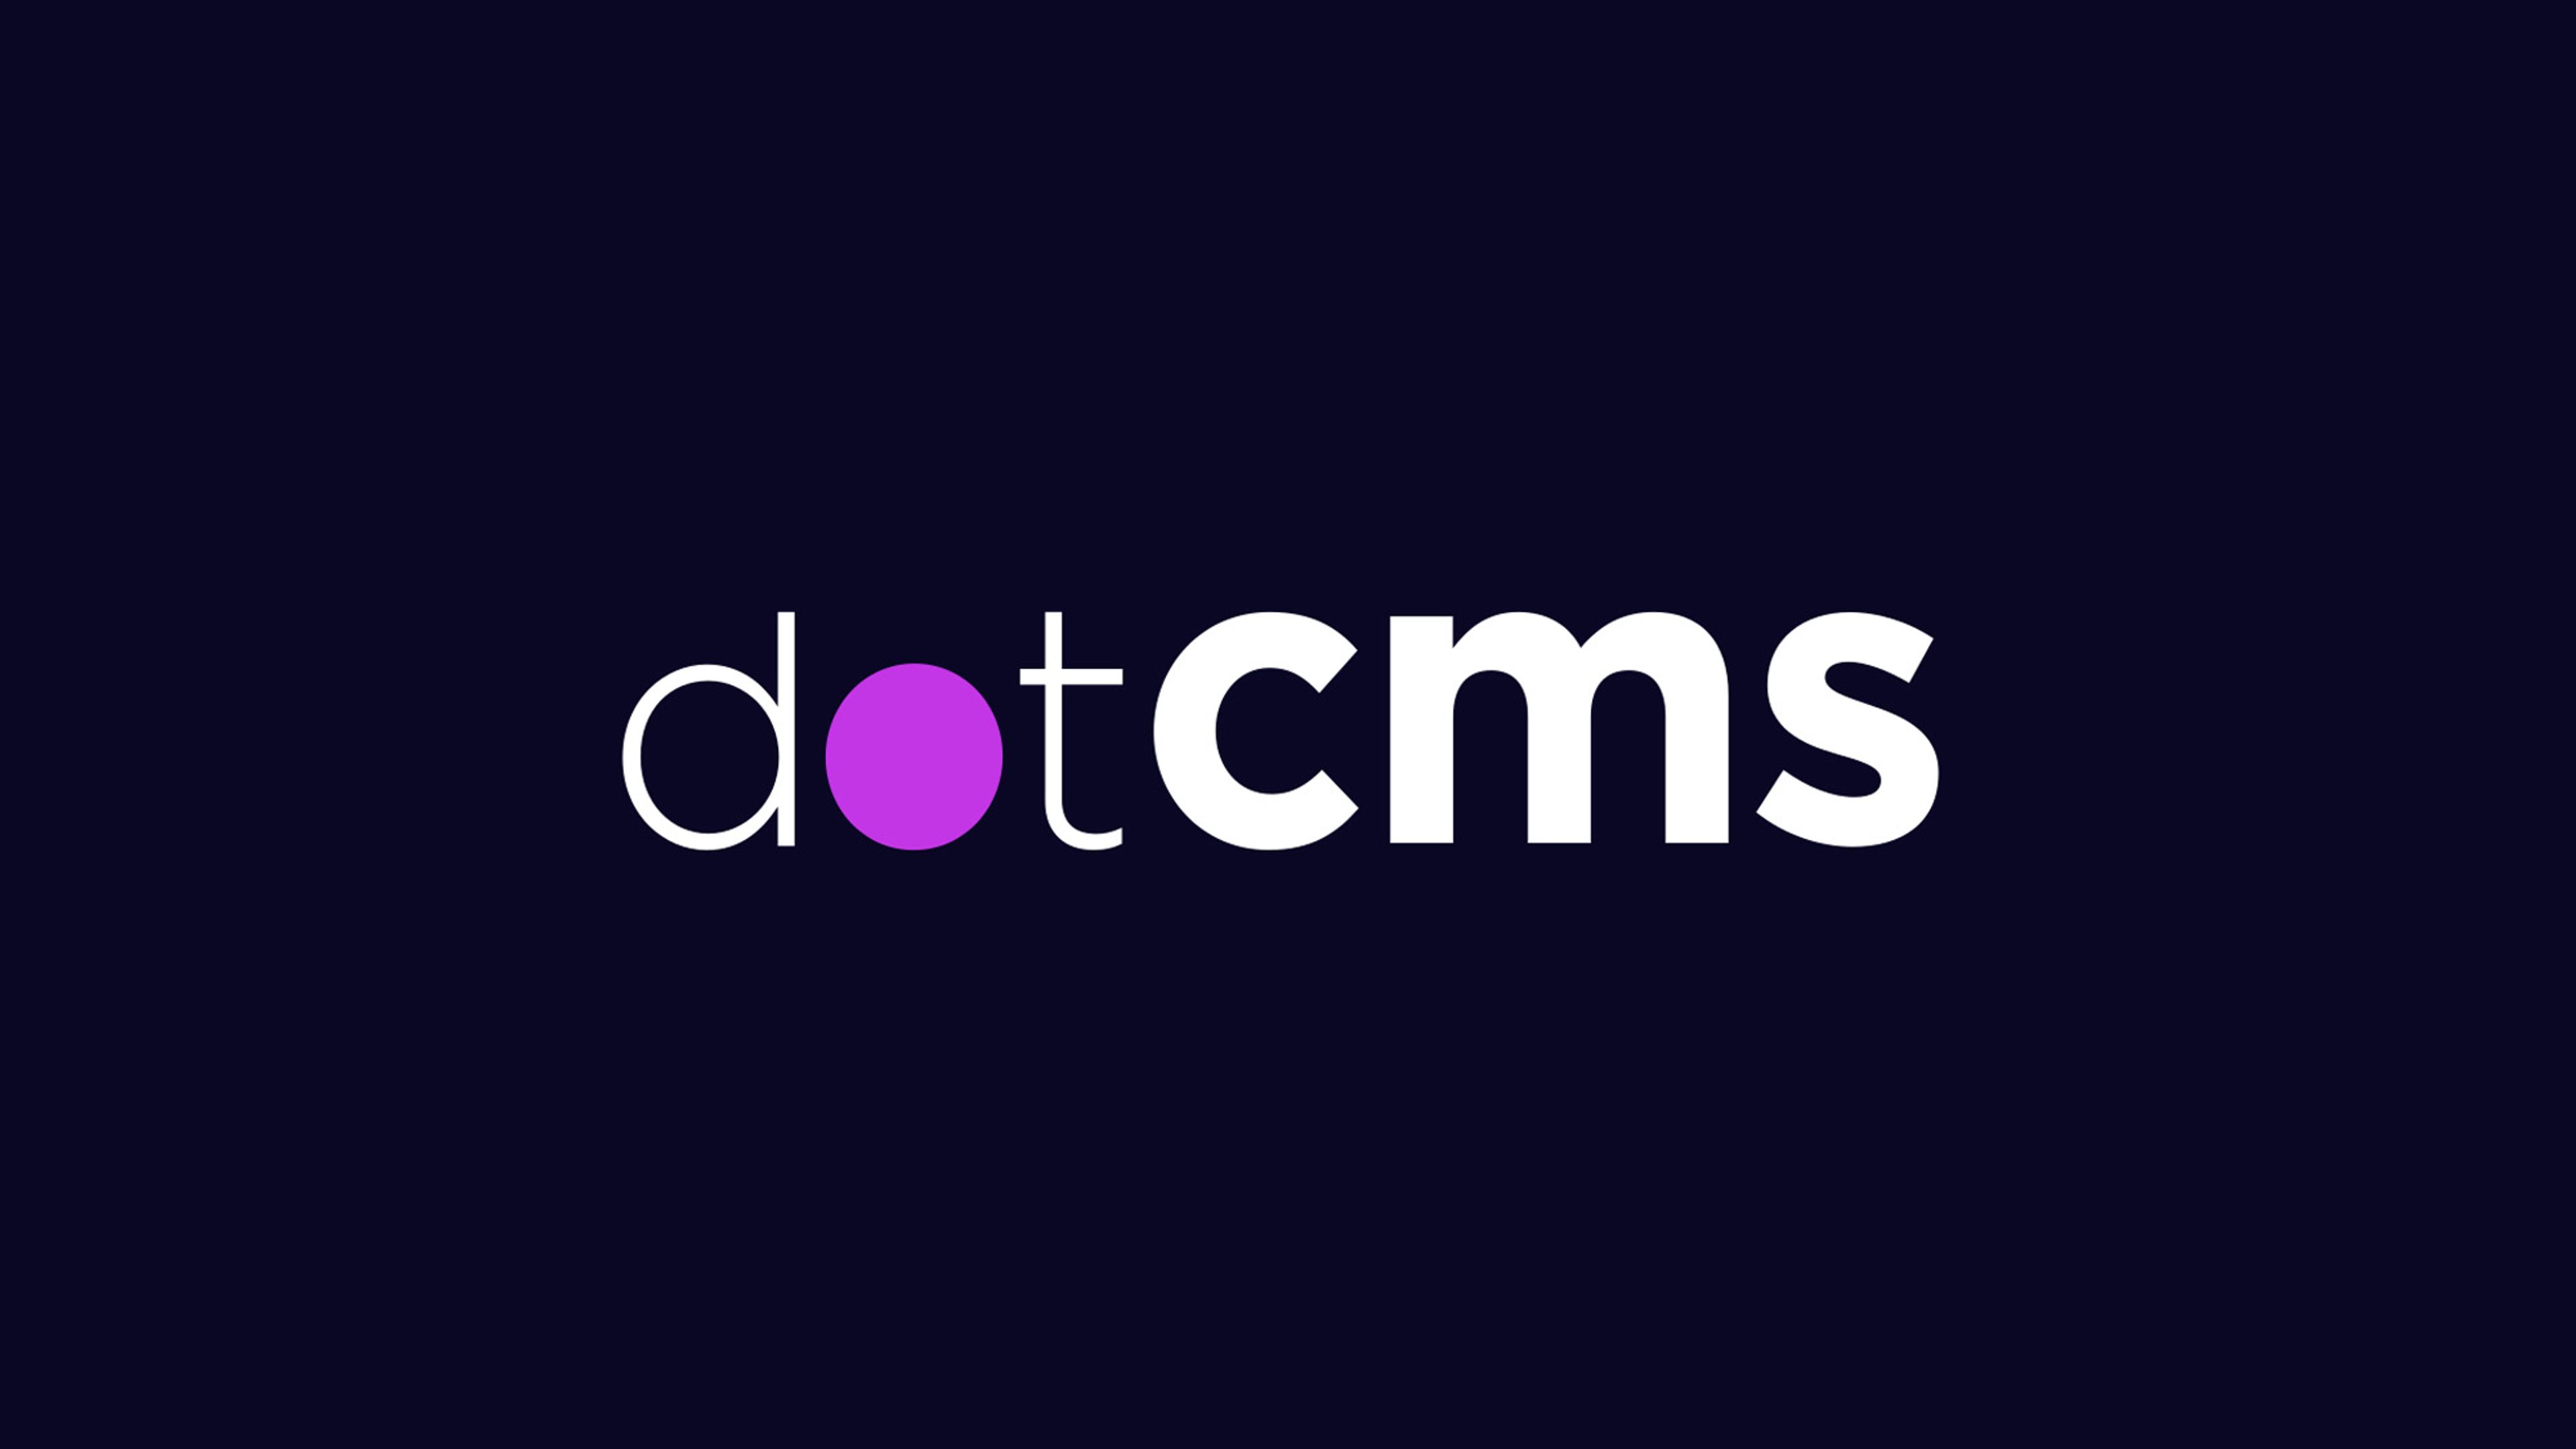 Image of dotCMS logo against a dark purple background.